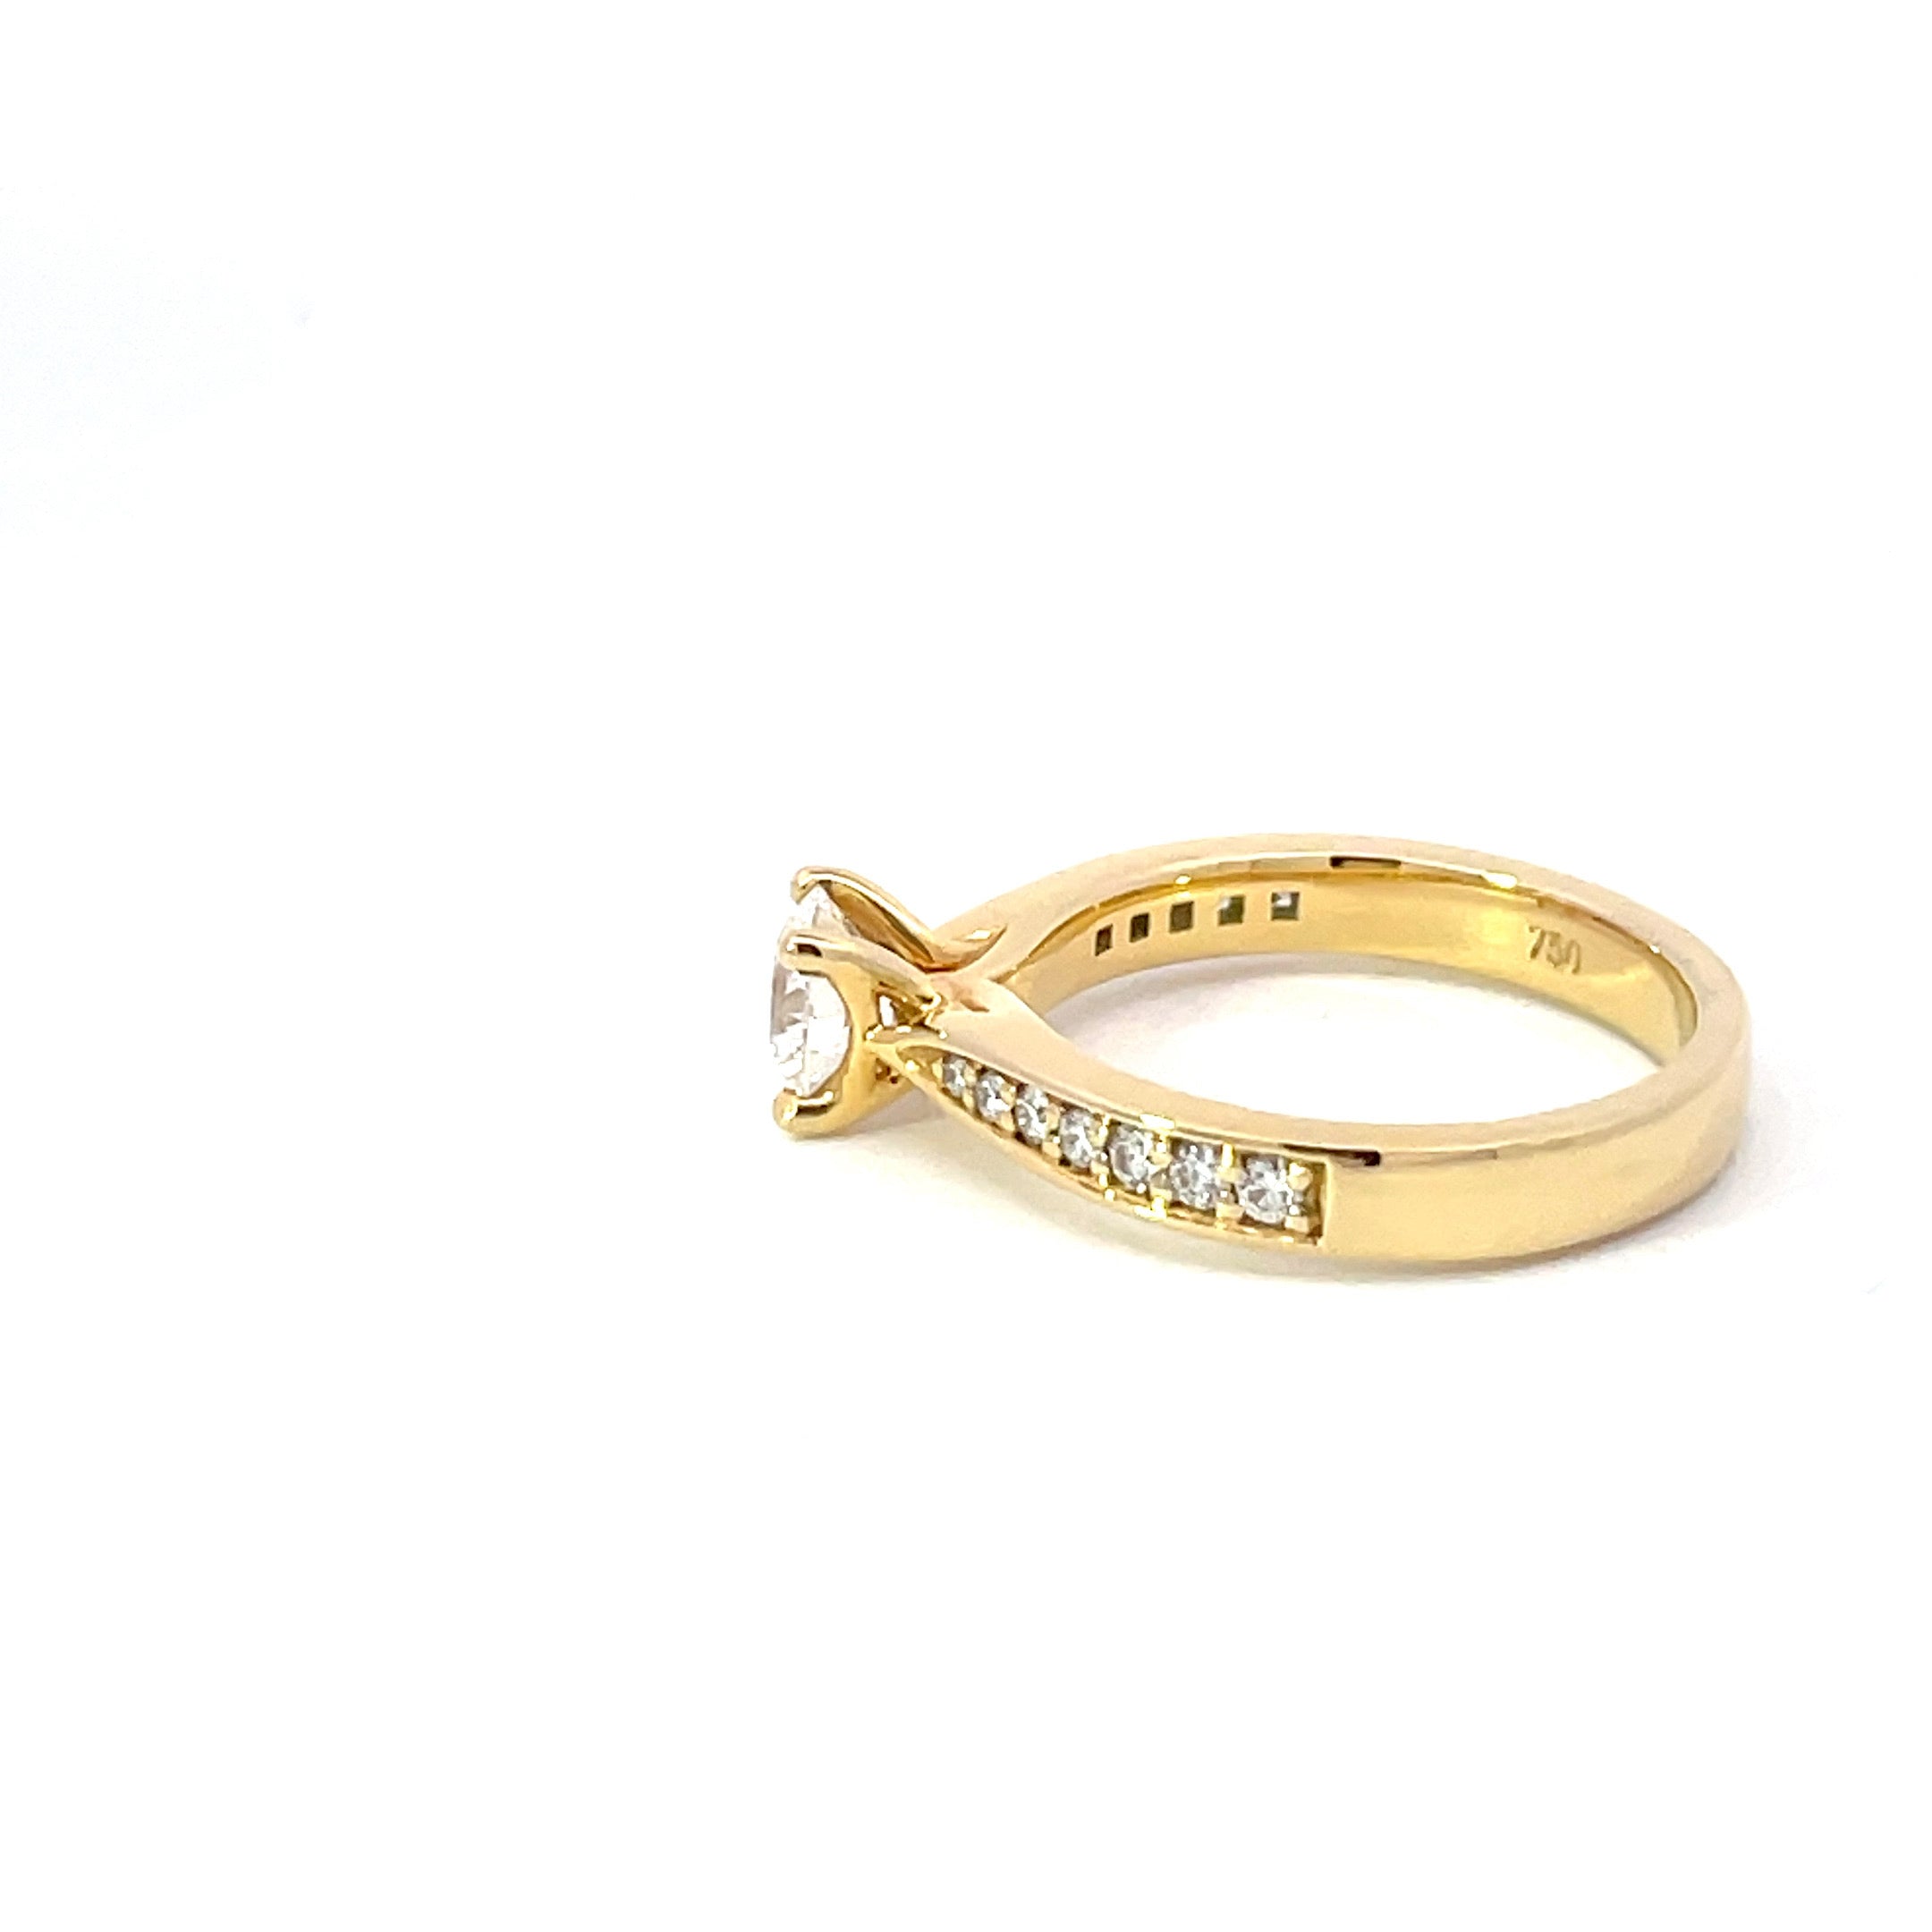 18ct Yellow Gold Passion8 Round Brilliant Diamond Solitaire Ring